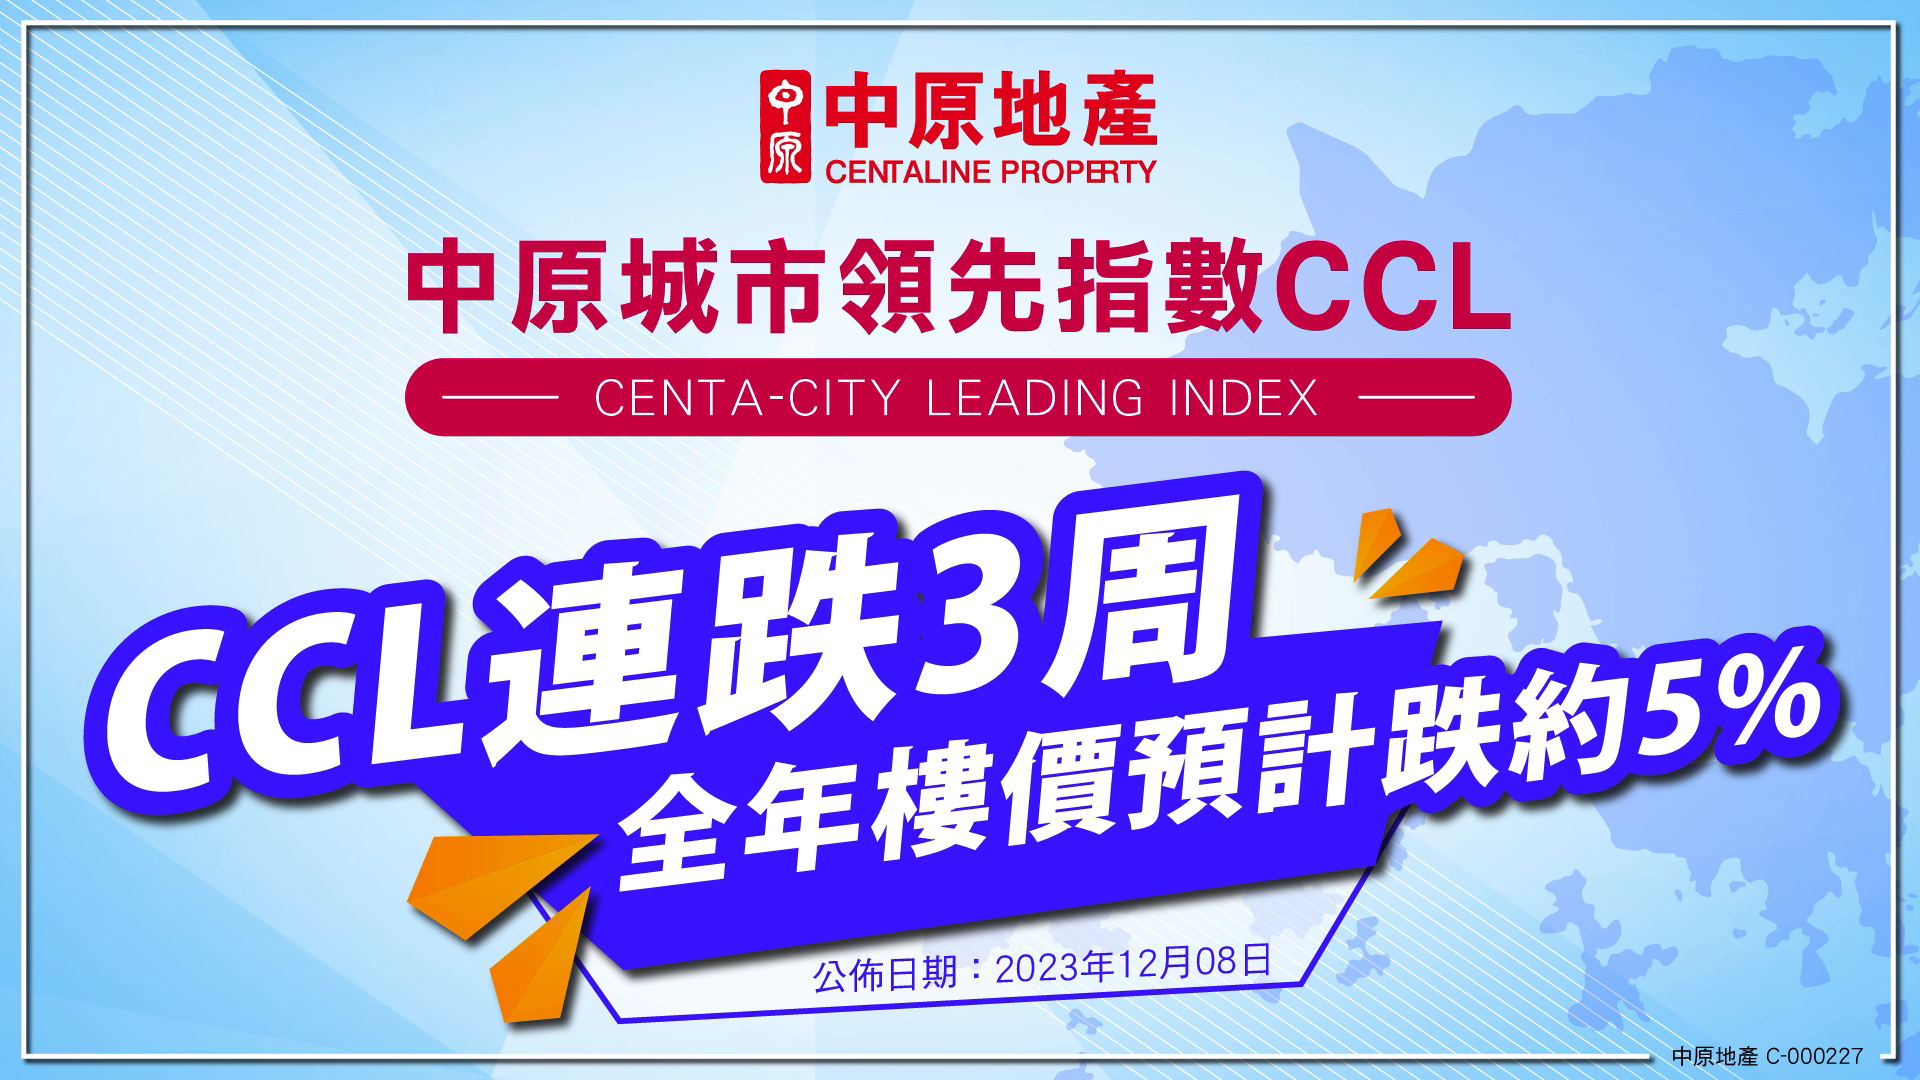 CCL連跌3周 全年樓價預計跌約5%